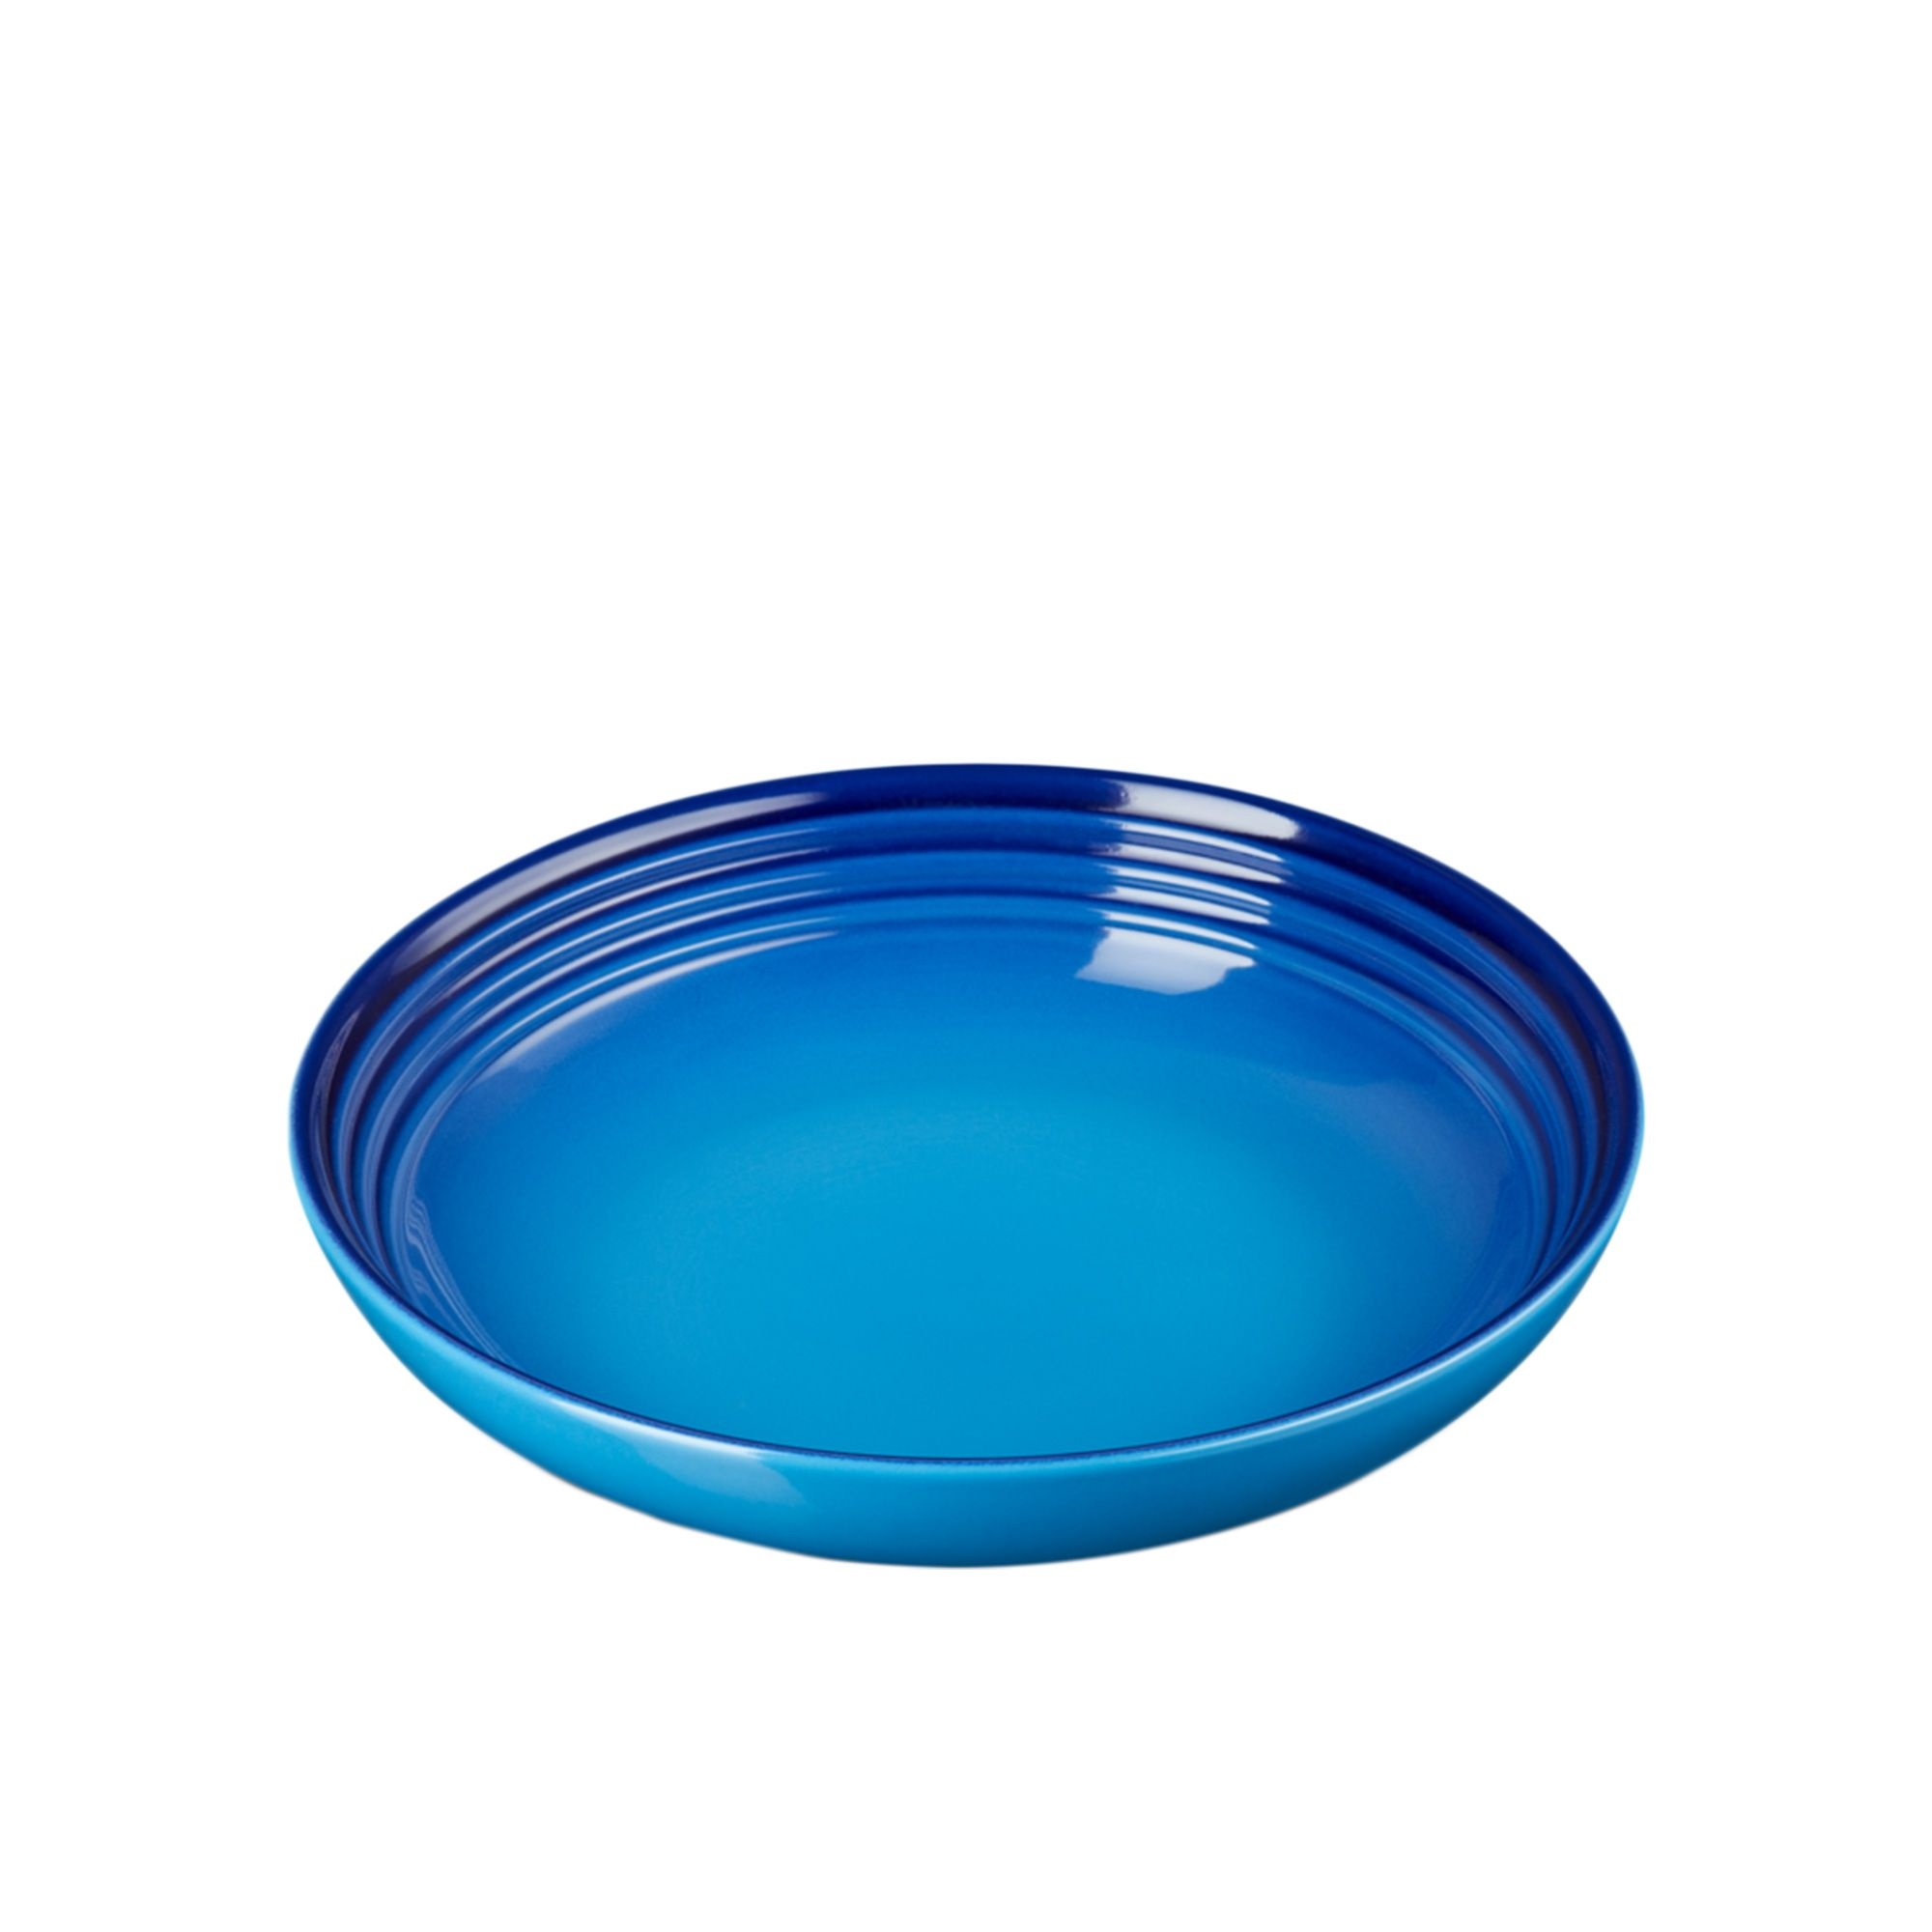 Le Creuset Stoneware Pasta Bowl Set of 4 Azure Blue Image 2